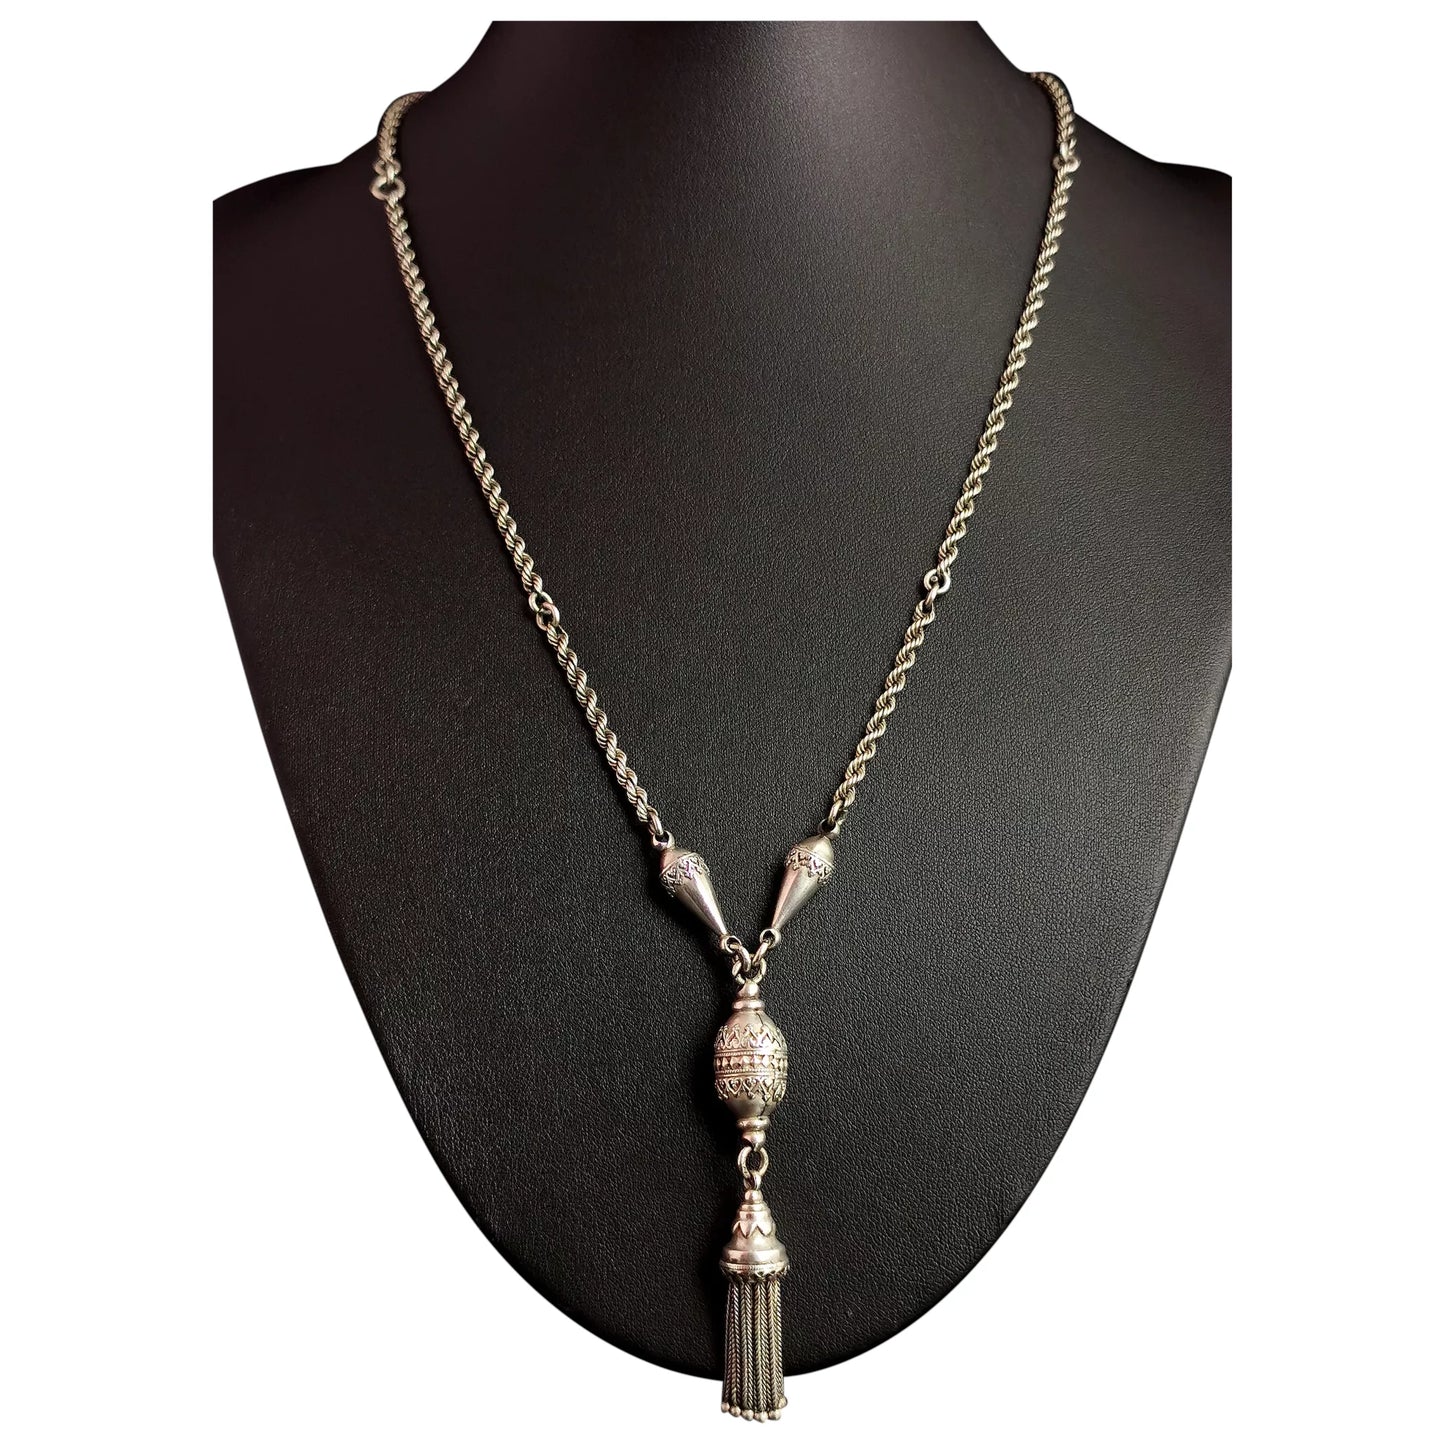 Antique Victorian silver tassel necklace, rope twist